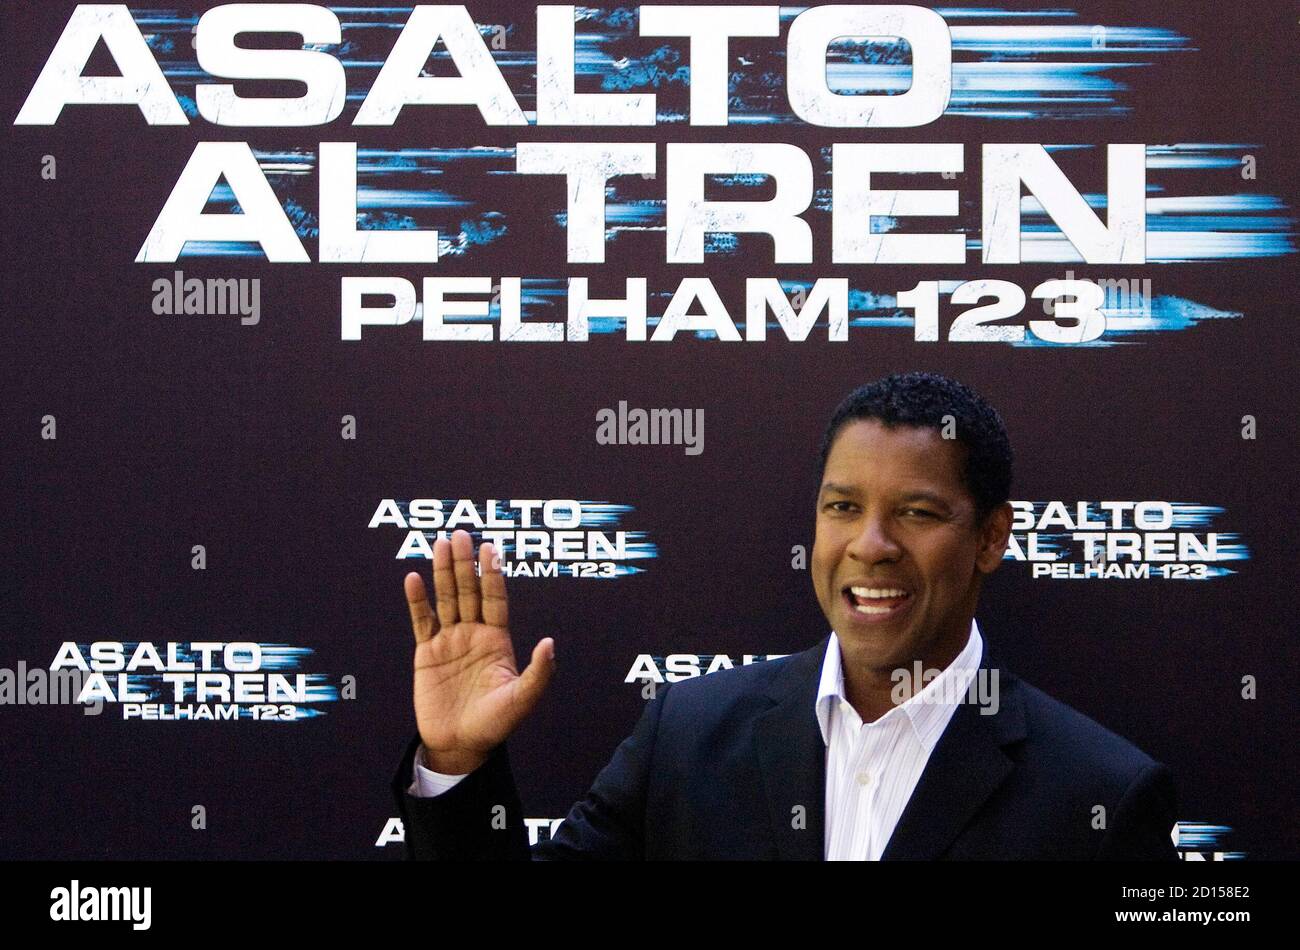 U.S. actor Denzel Washington gestures during a photocall to promote his lastest film 'The Taking of Pelham 123' ('Asalto al tren Pelham 123') in Madrid July 17, 2009. REUTERS/Sergio Perez  (SPAIN ENTERTAINMENT) Stock Photo